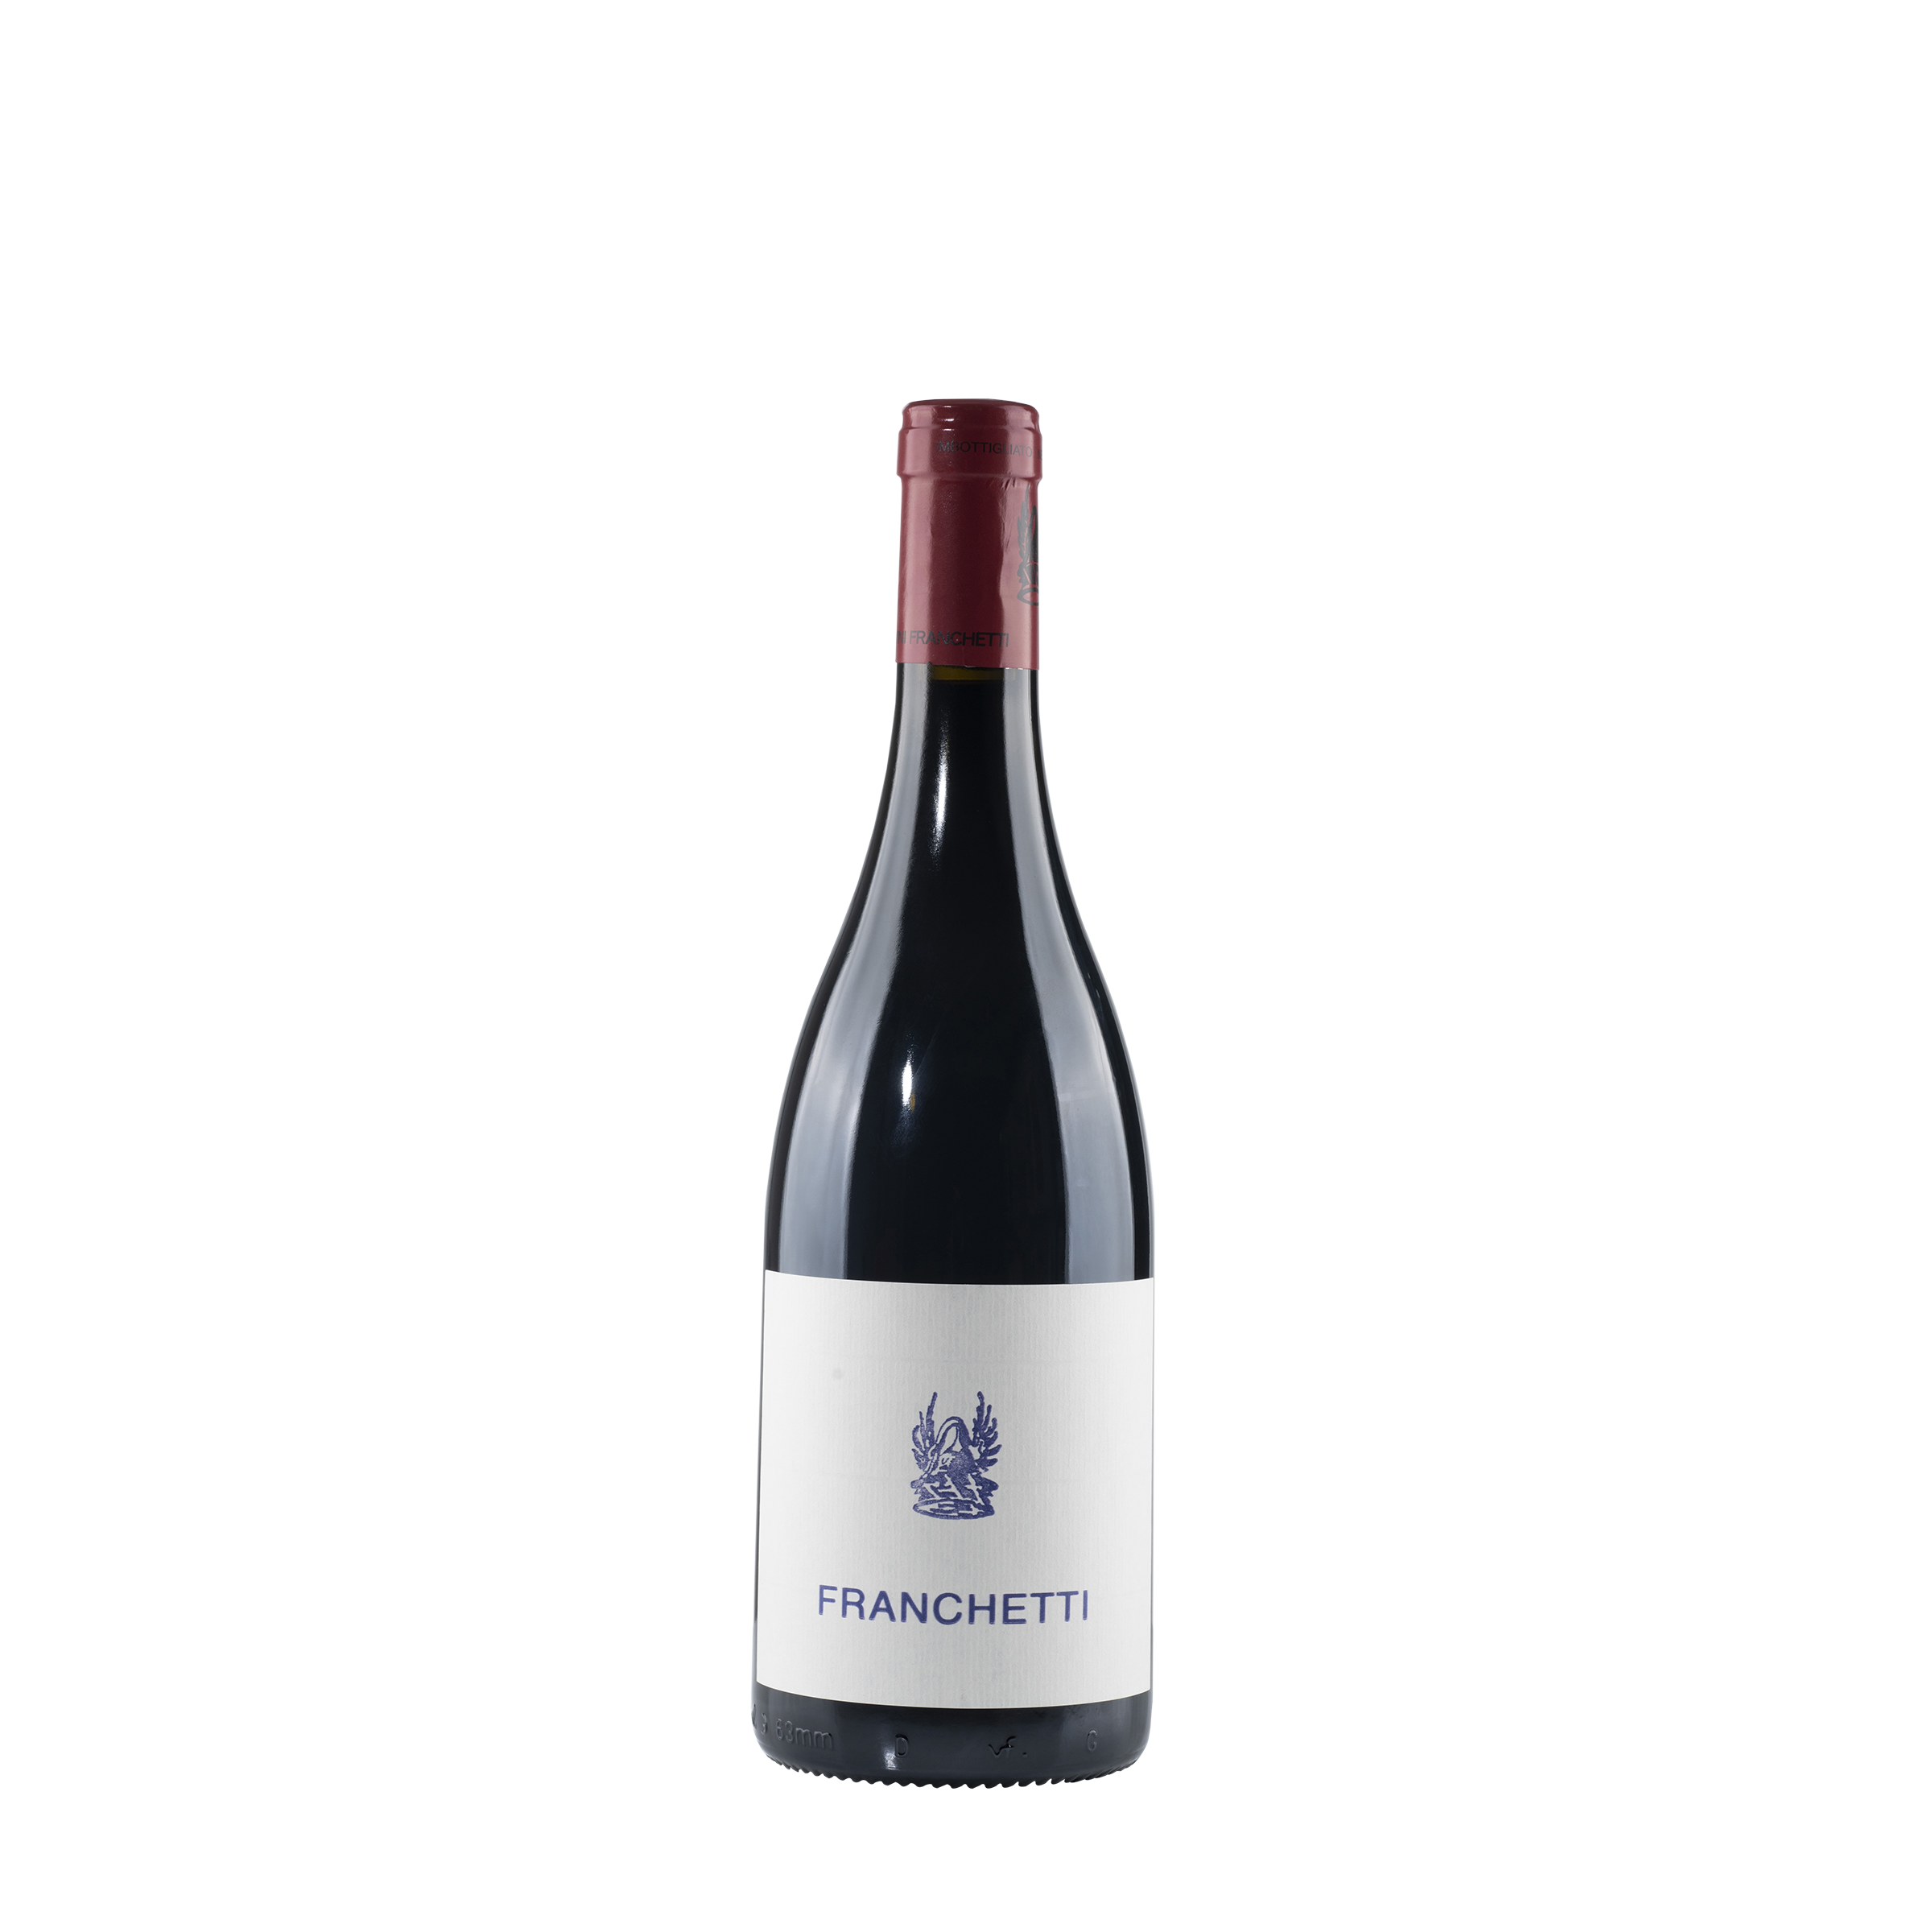 Franchetti "Terre Siciliane IGT" 2020 Bottle Front